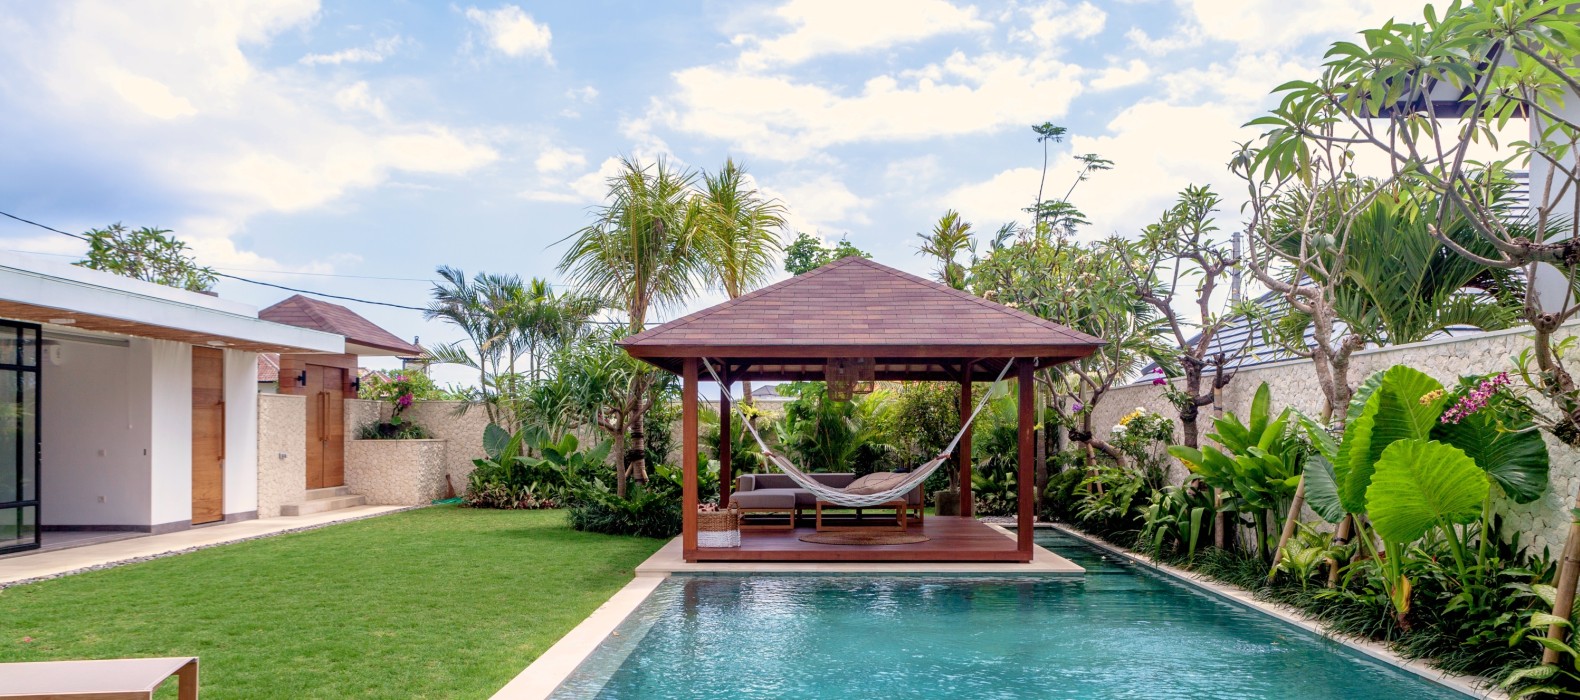 Exterior area view of Villa Natalana in Bali